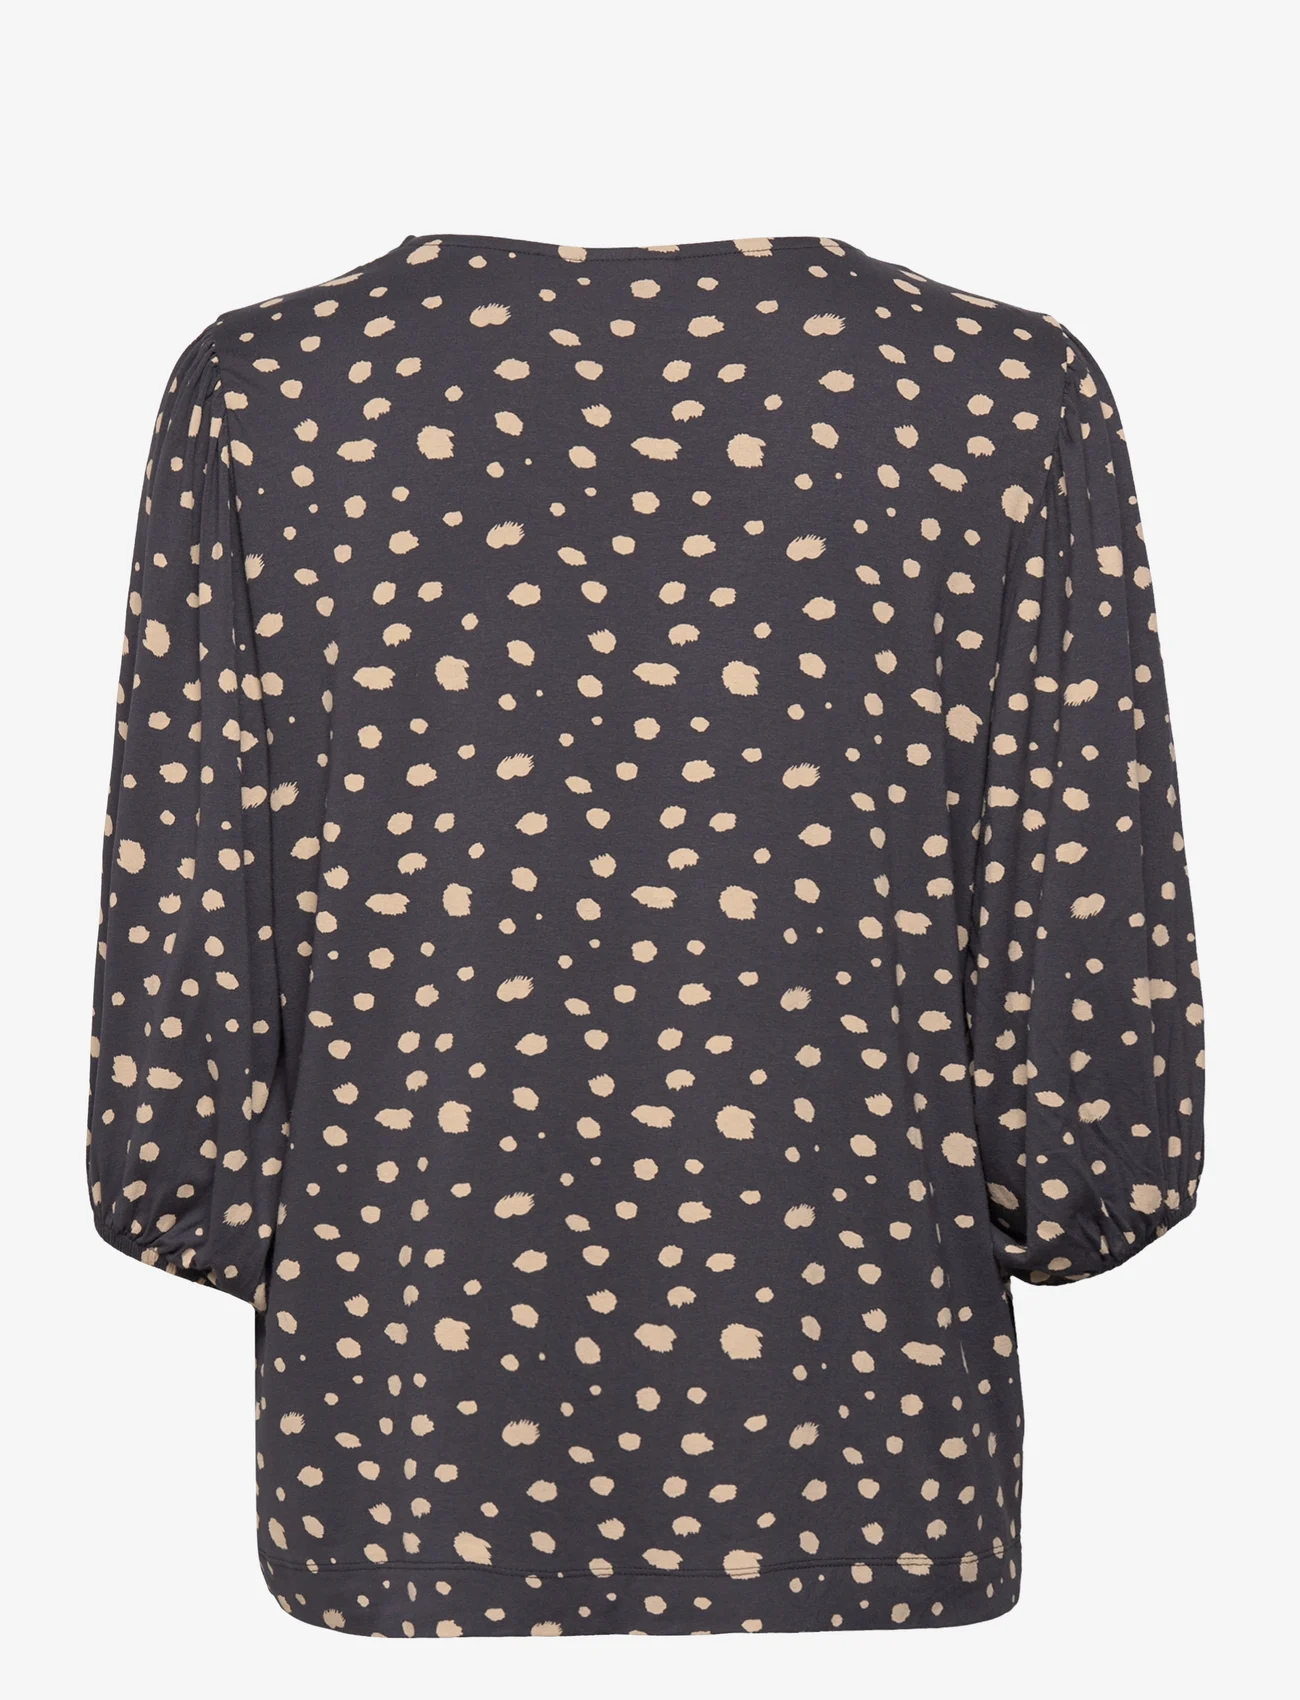 Saint Tropez - MinaSZ V-N Blouse - long-sleeved blouses - nine iron dot - 1